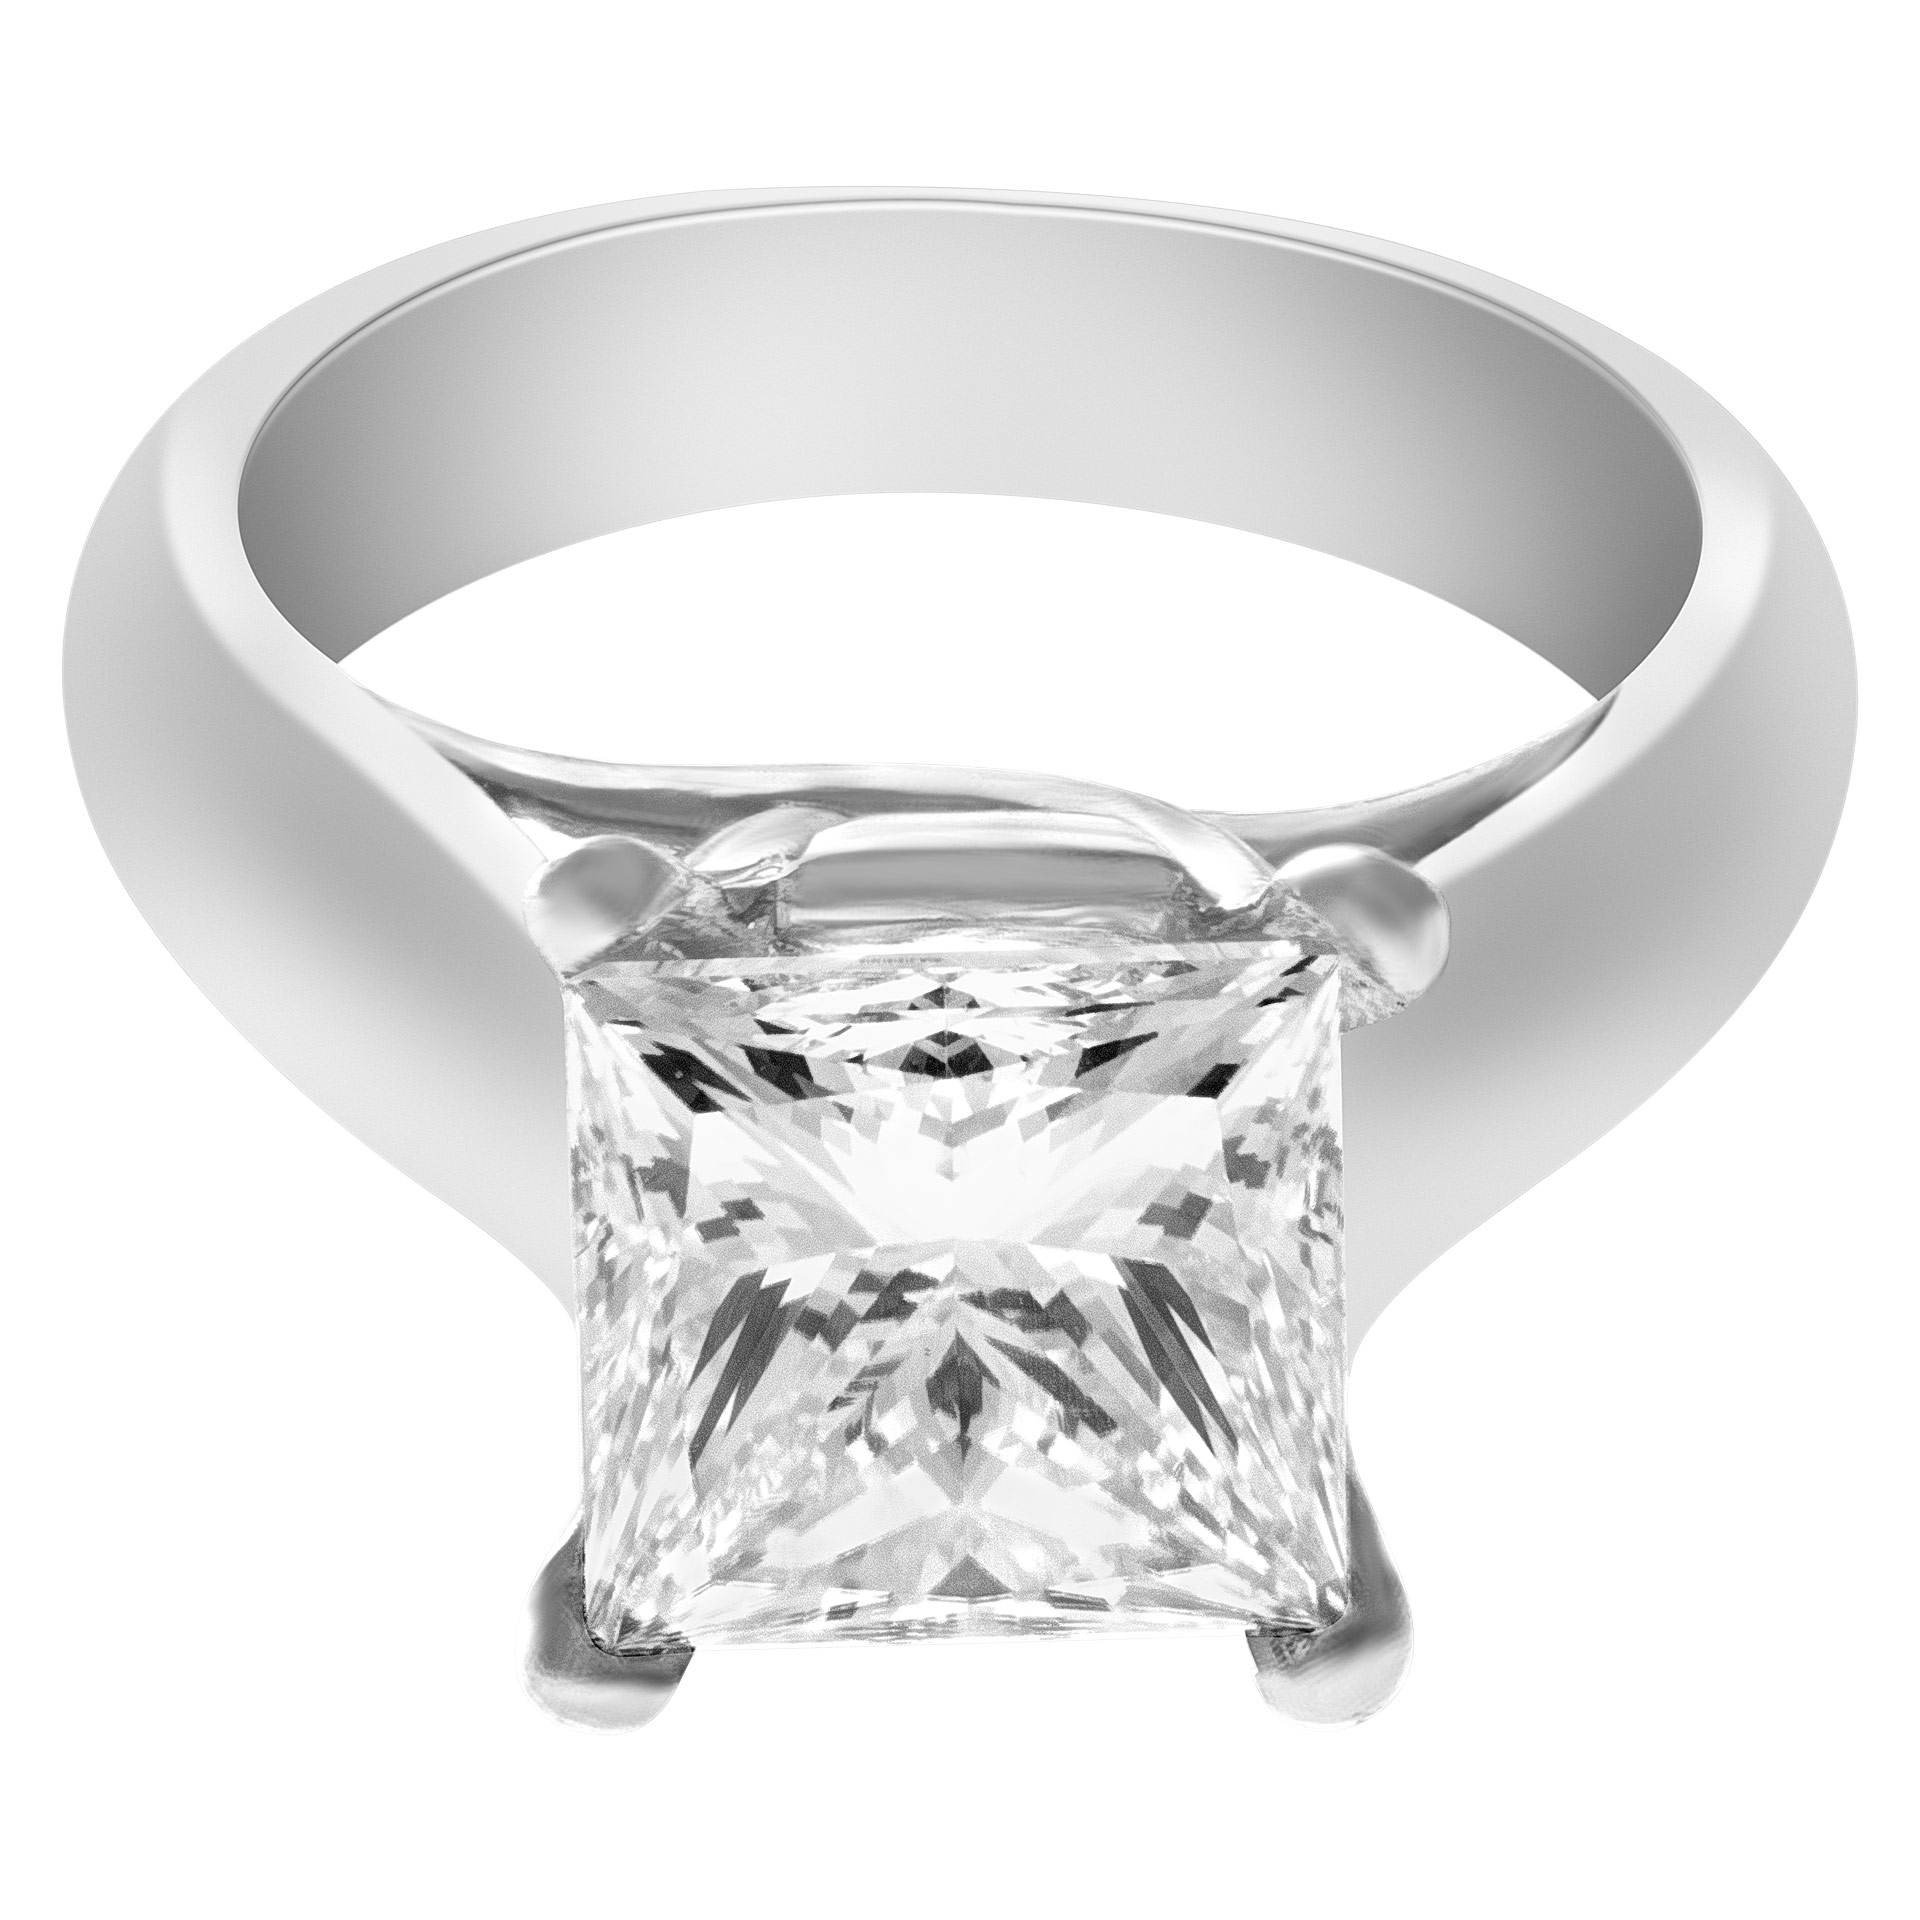 GIA certified square modified brilliant cut 3.24 carats (G color VS2 clarity) diamond ring.